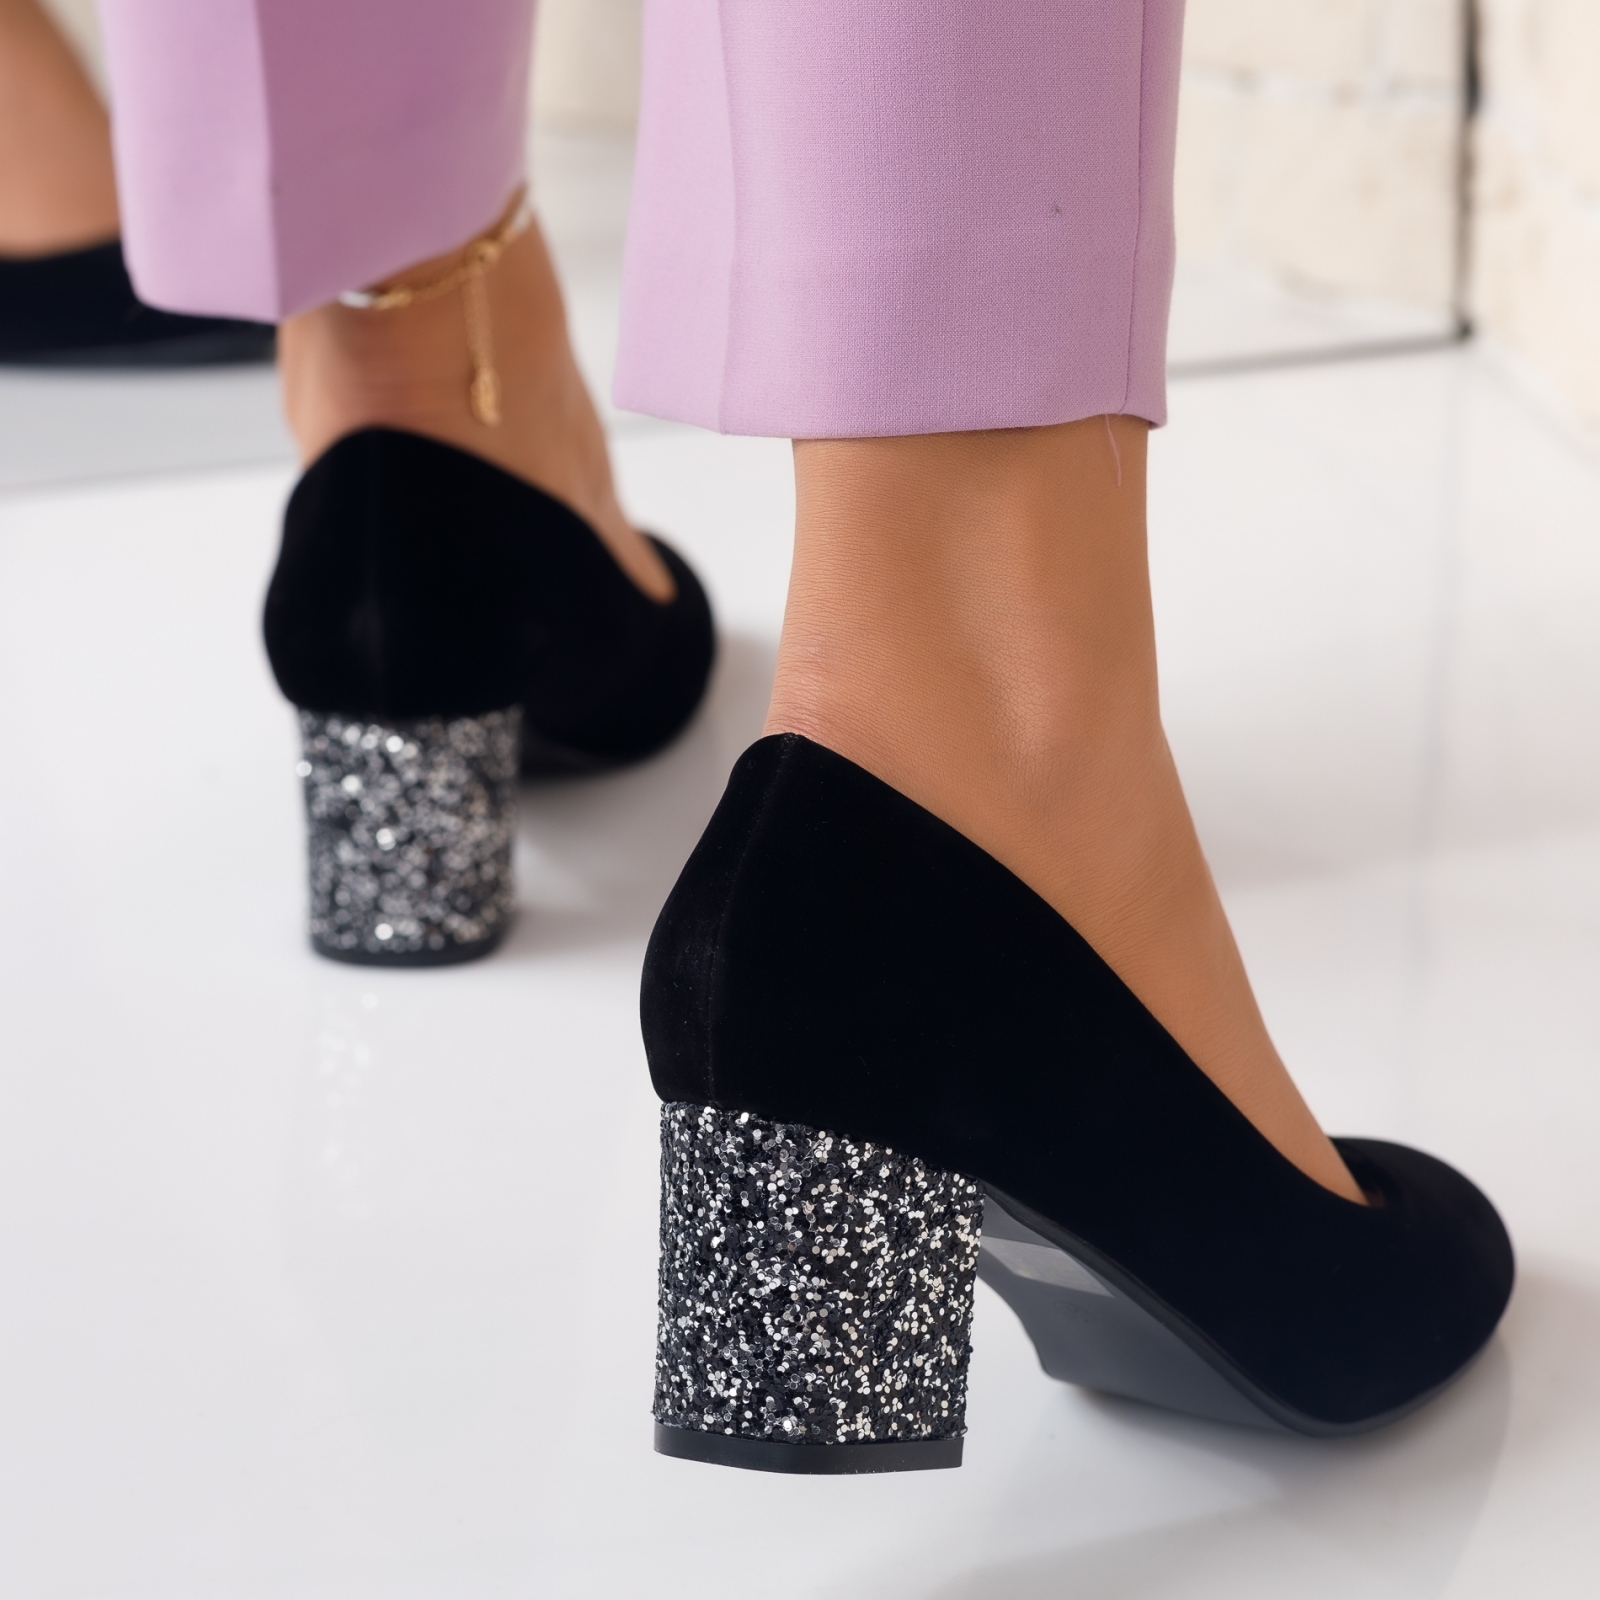 Pantofi Dama cu Toc Isabela Negri #3920M